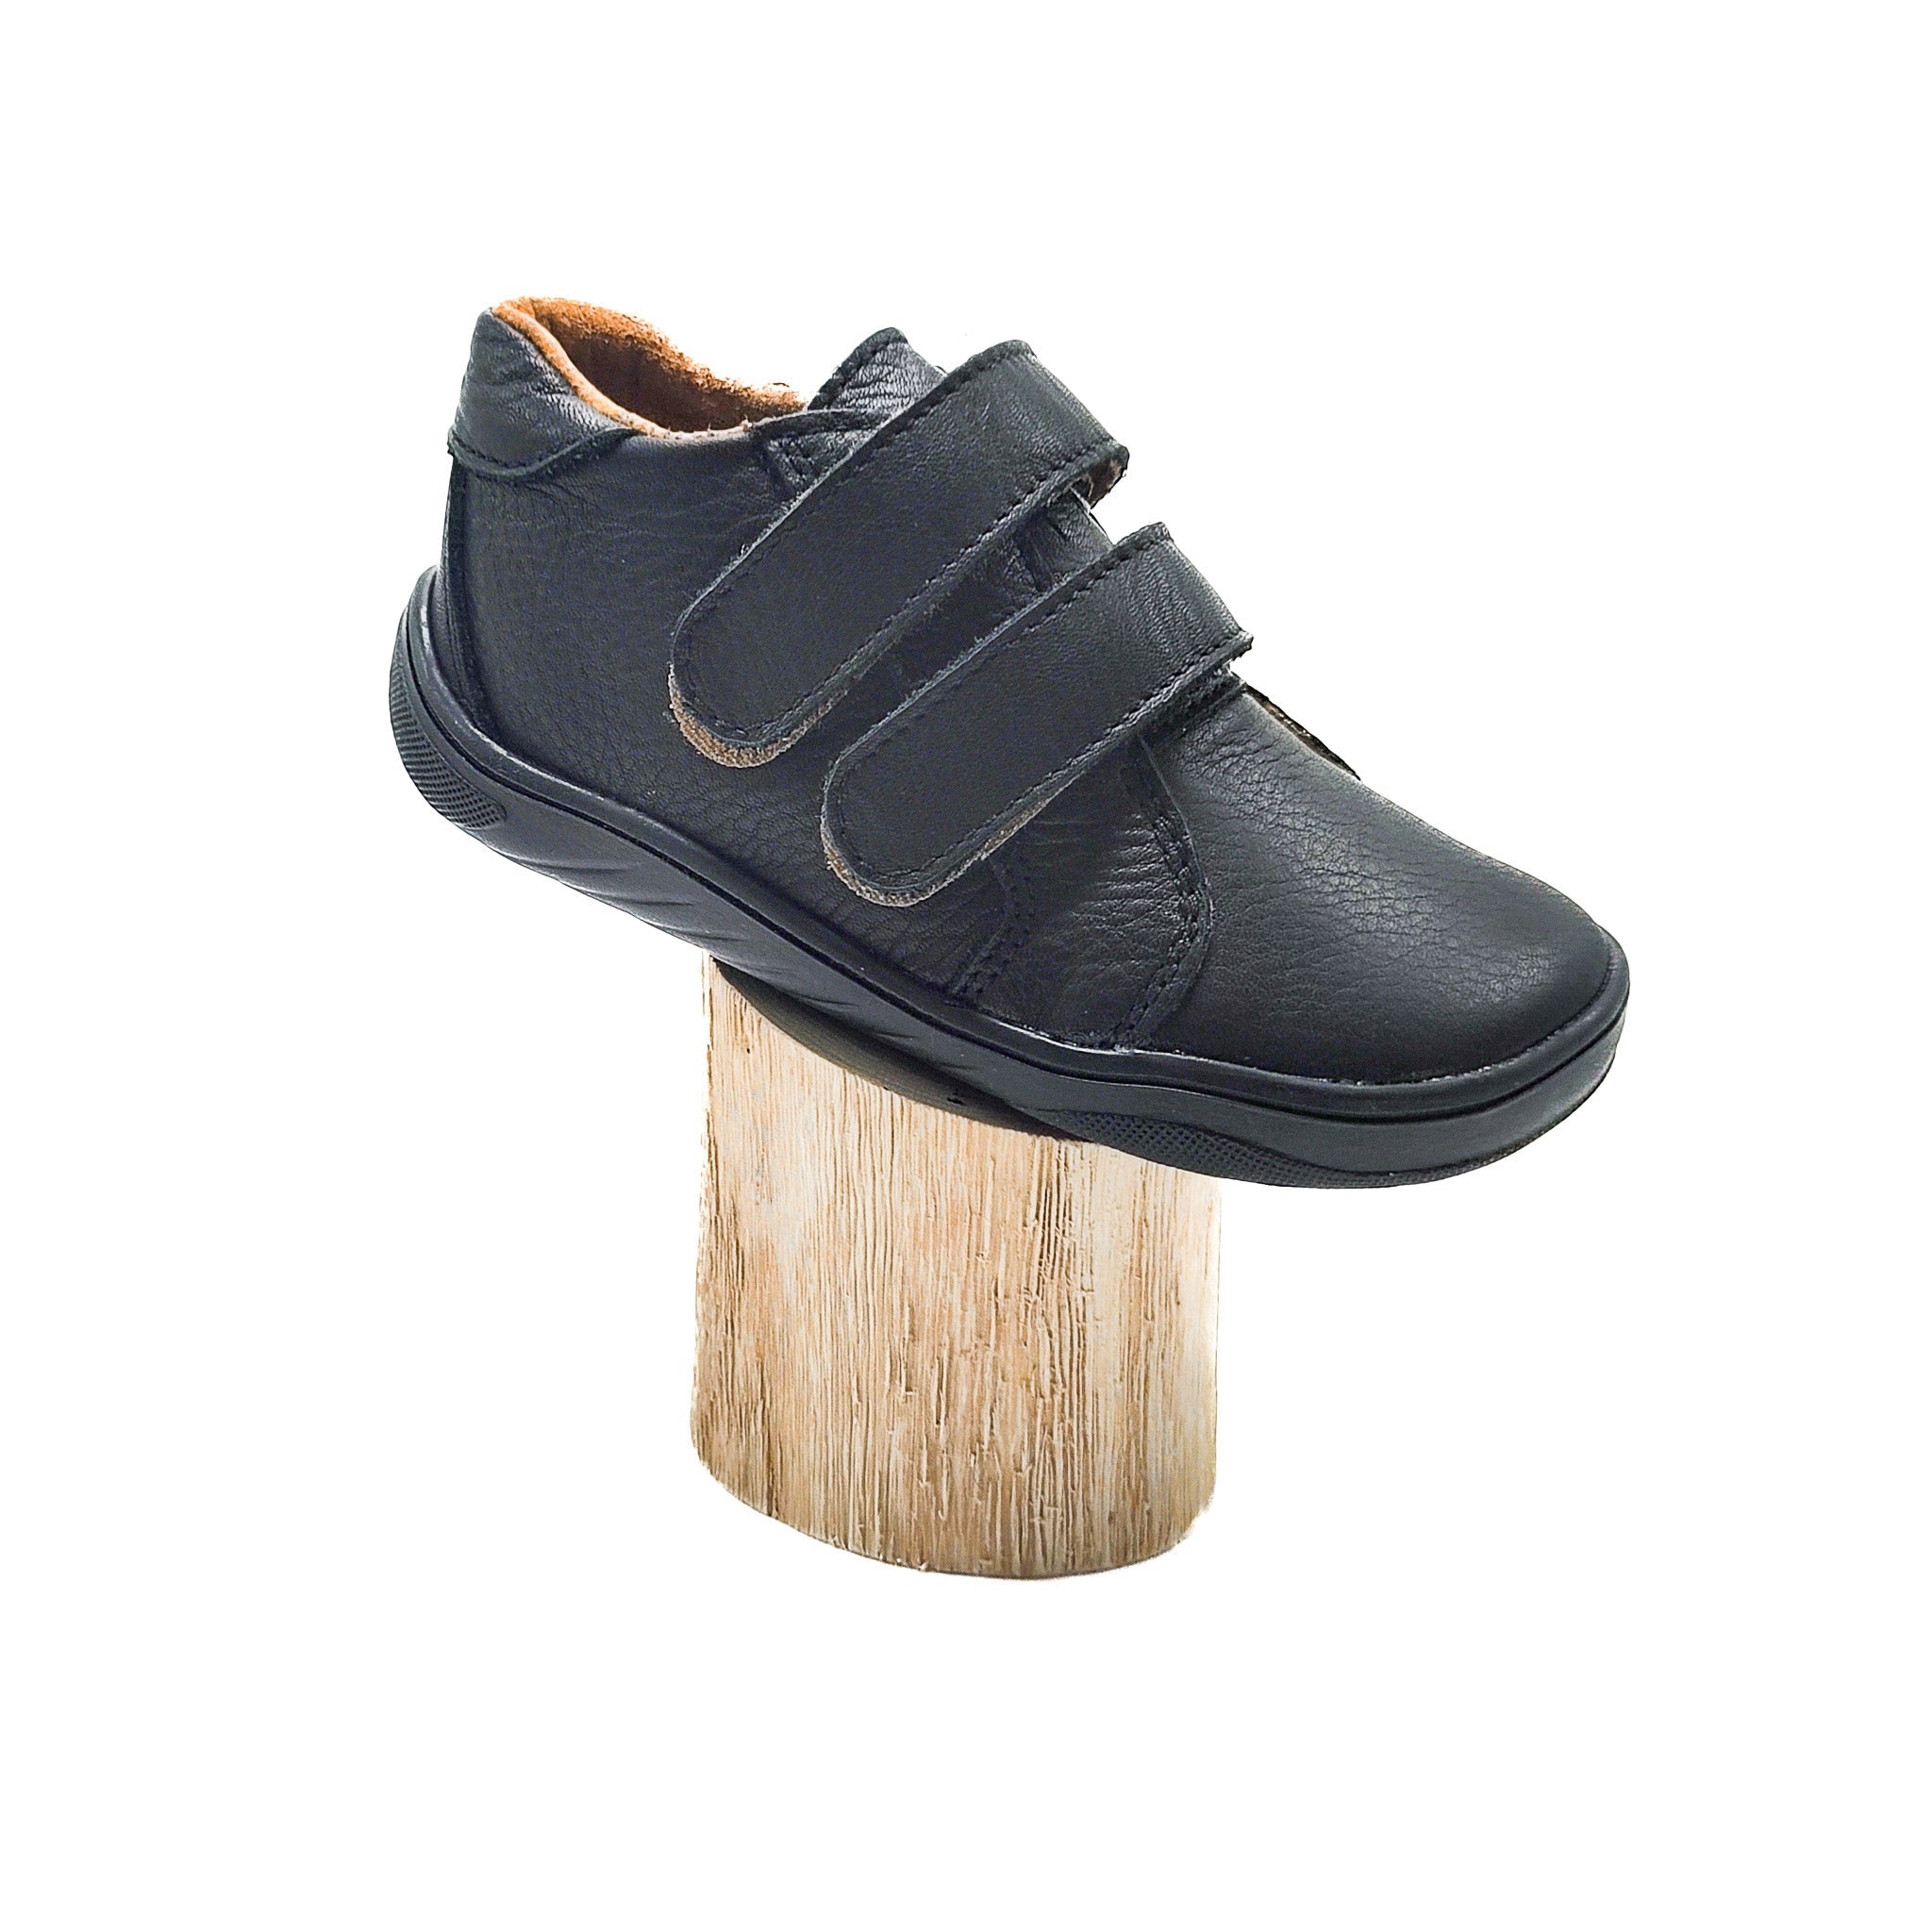 Zapatos Respetuosos Niños Barefoot – Cacles Barefoot